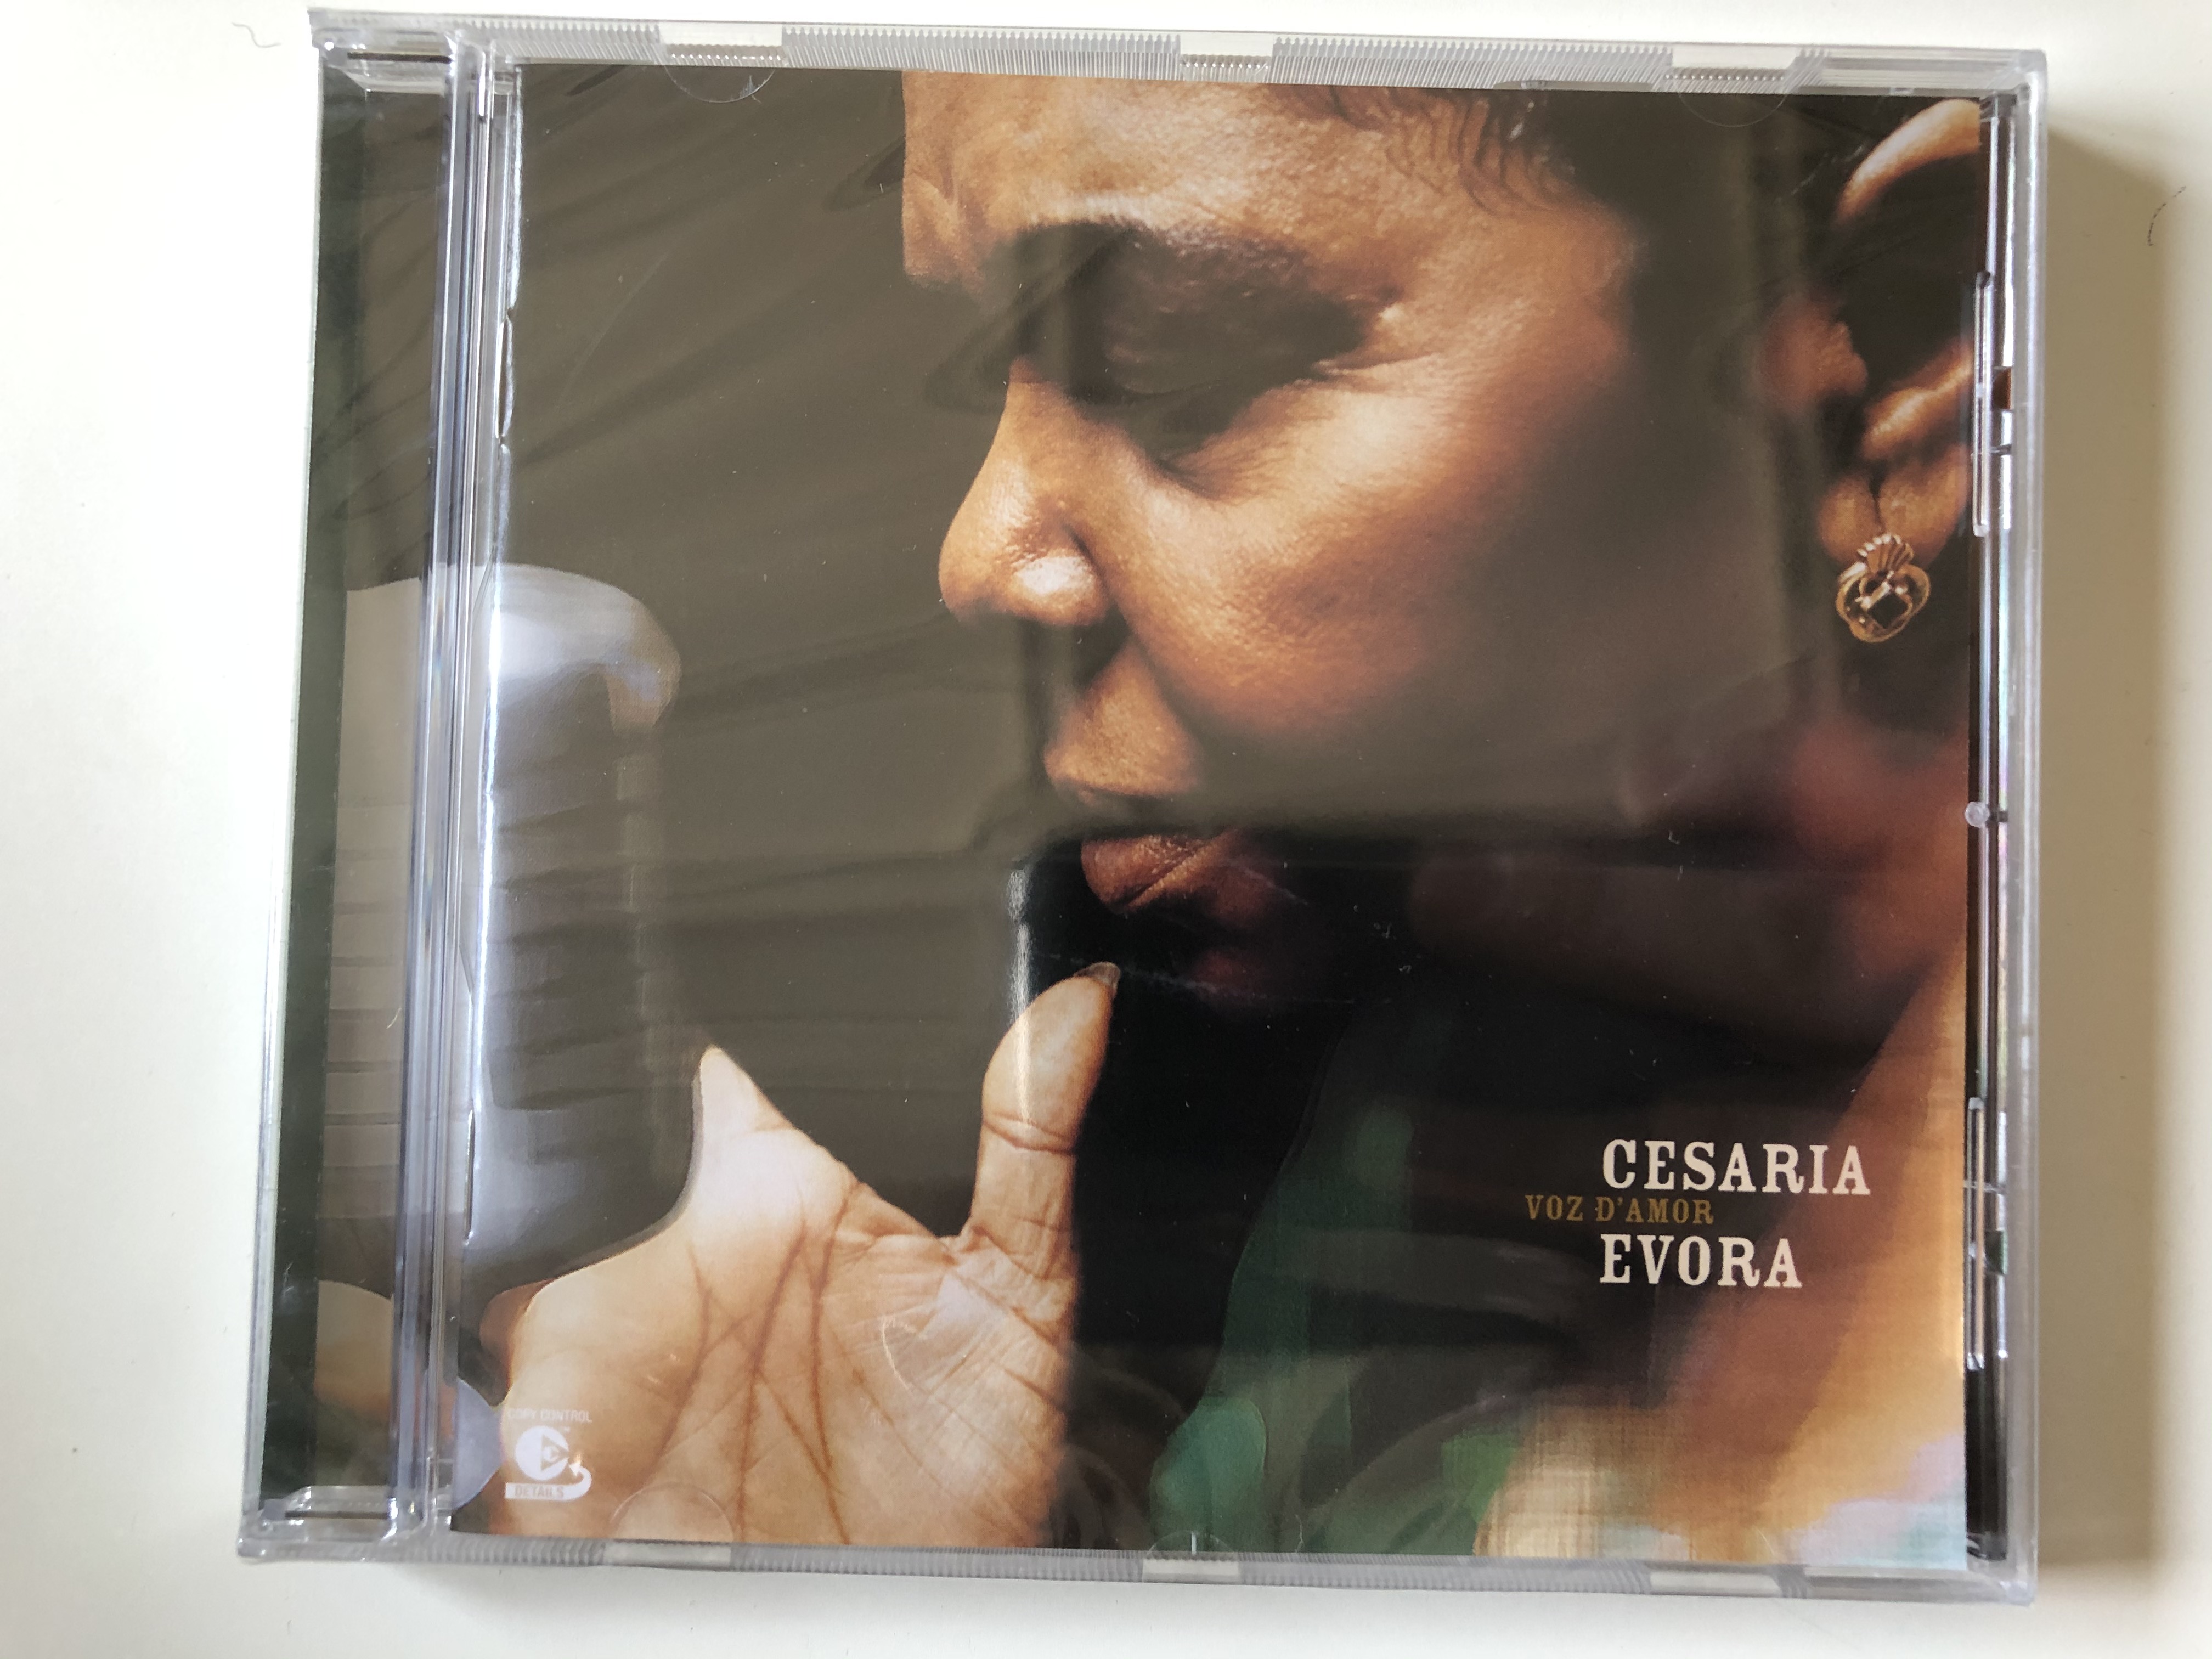 cesaria-evora-voz-d-amor-lusafrica-audio-cd-2003-82876-543-802-1-.jpg